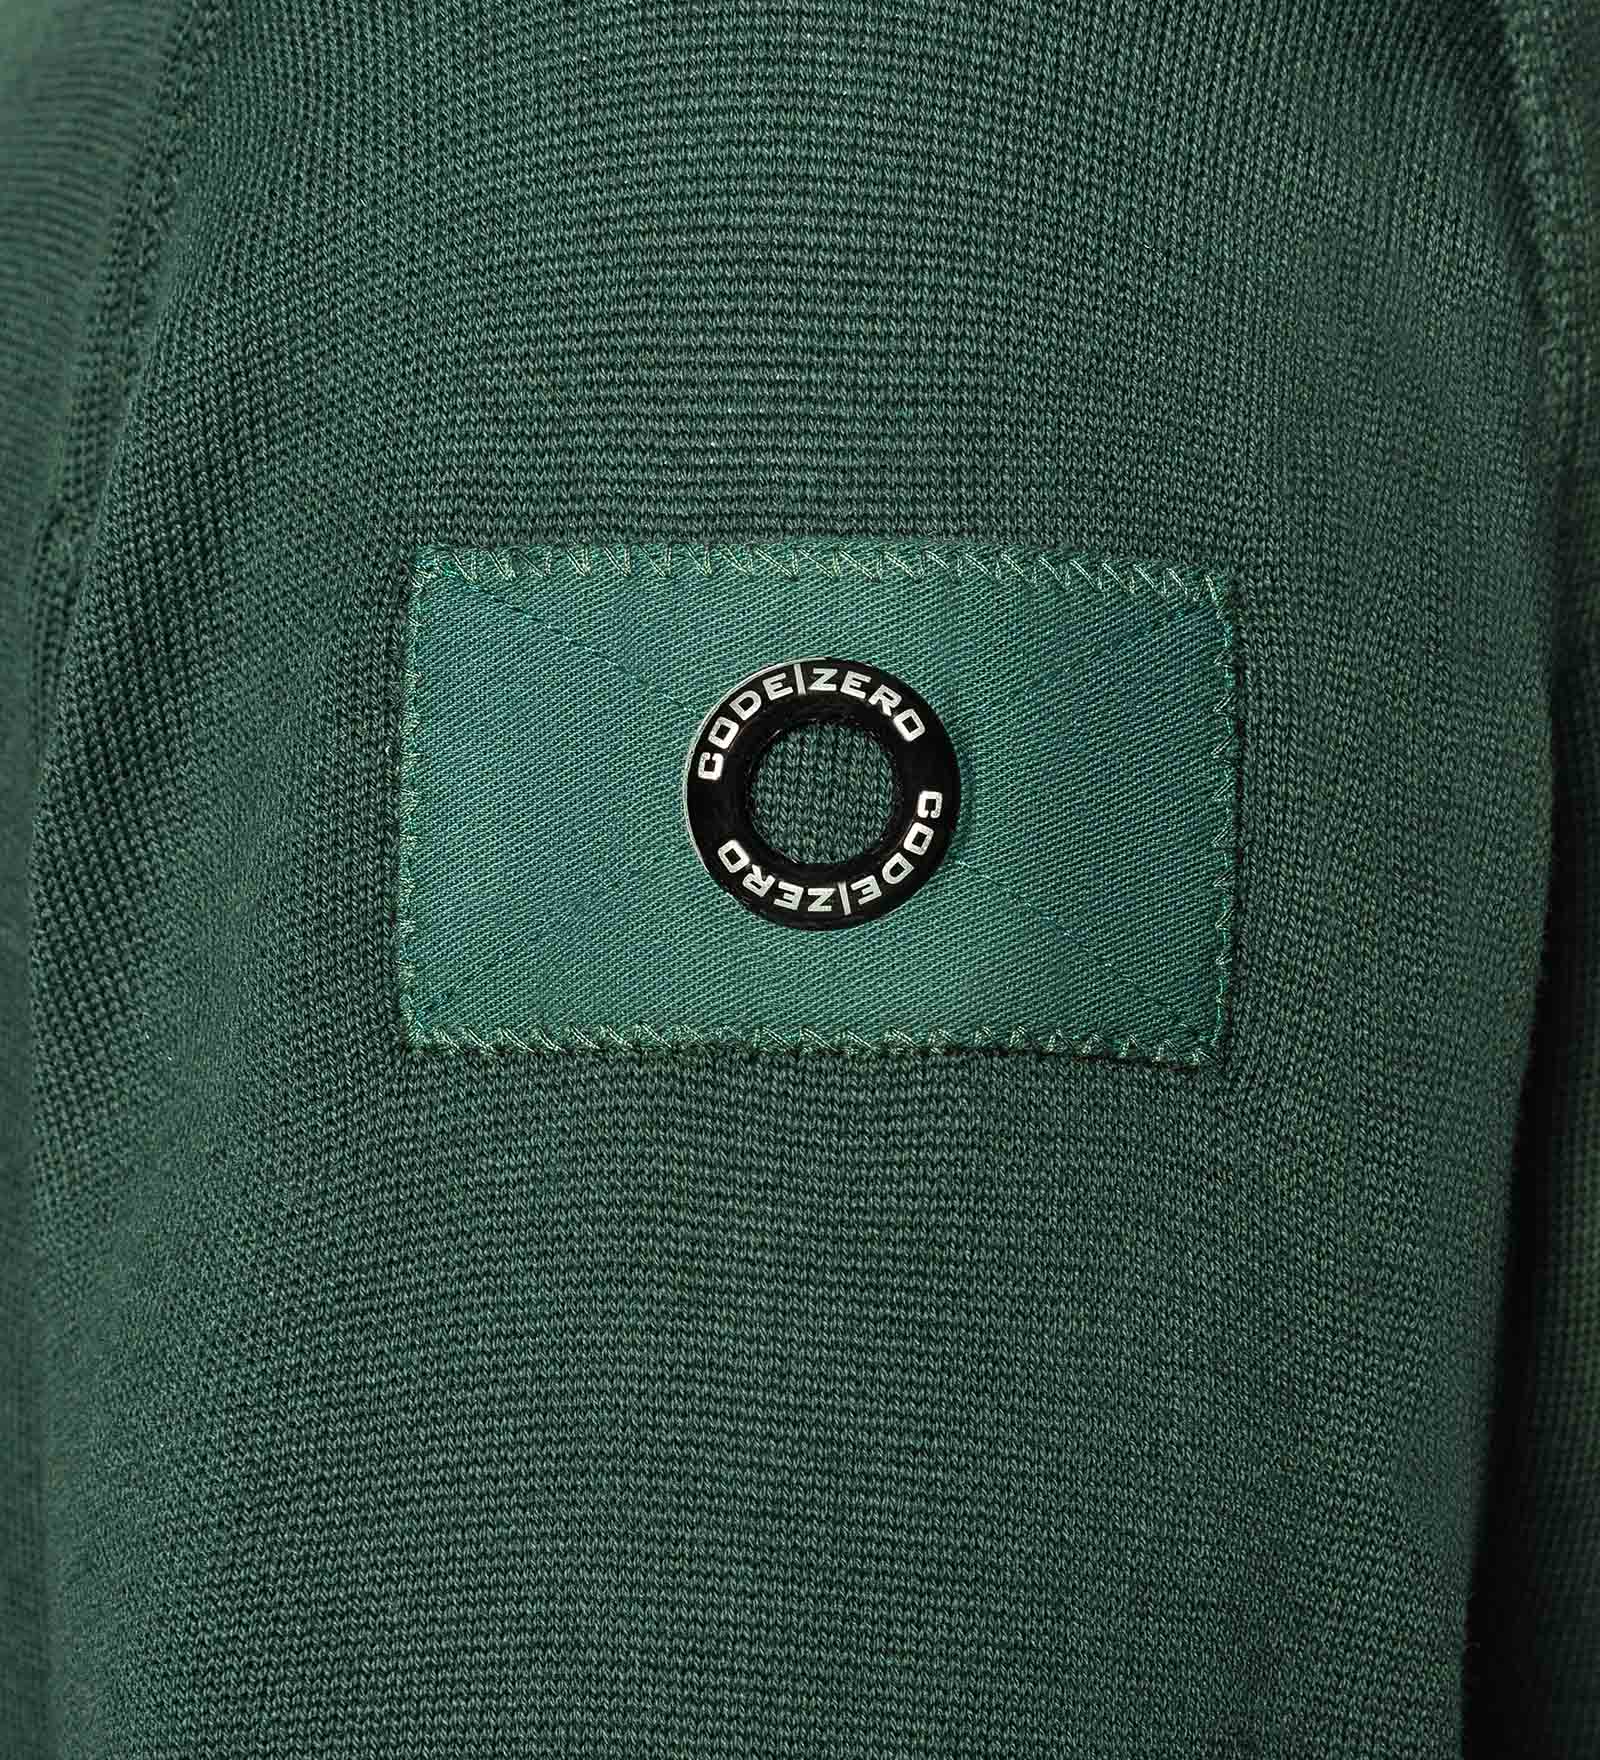 Eyelet of a green jumper